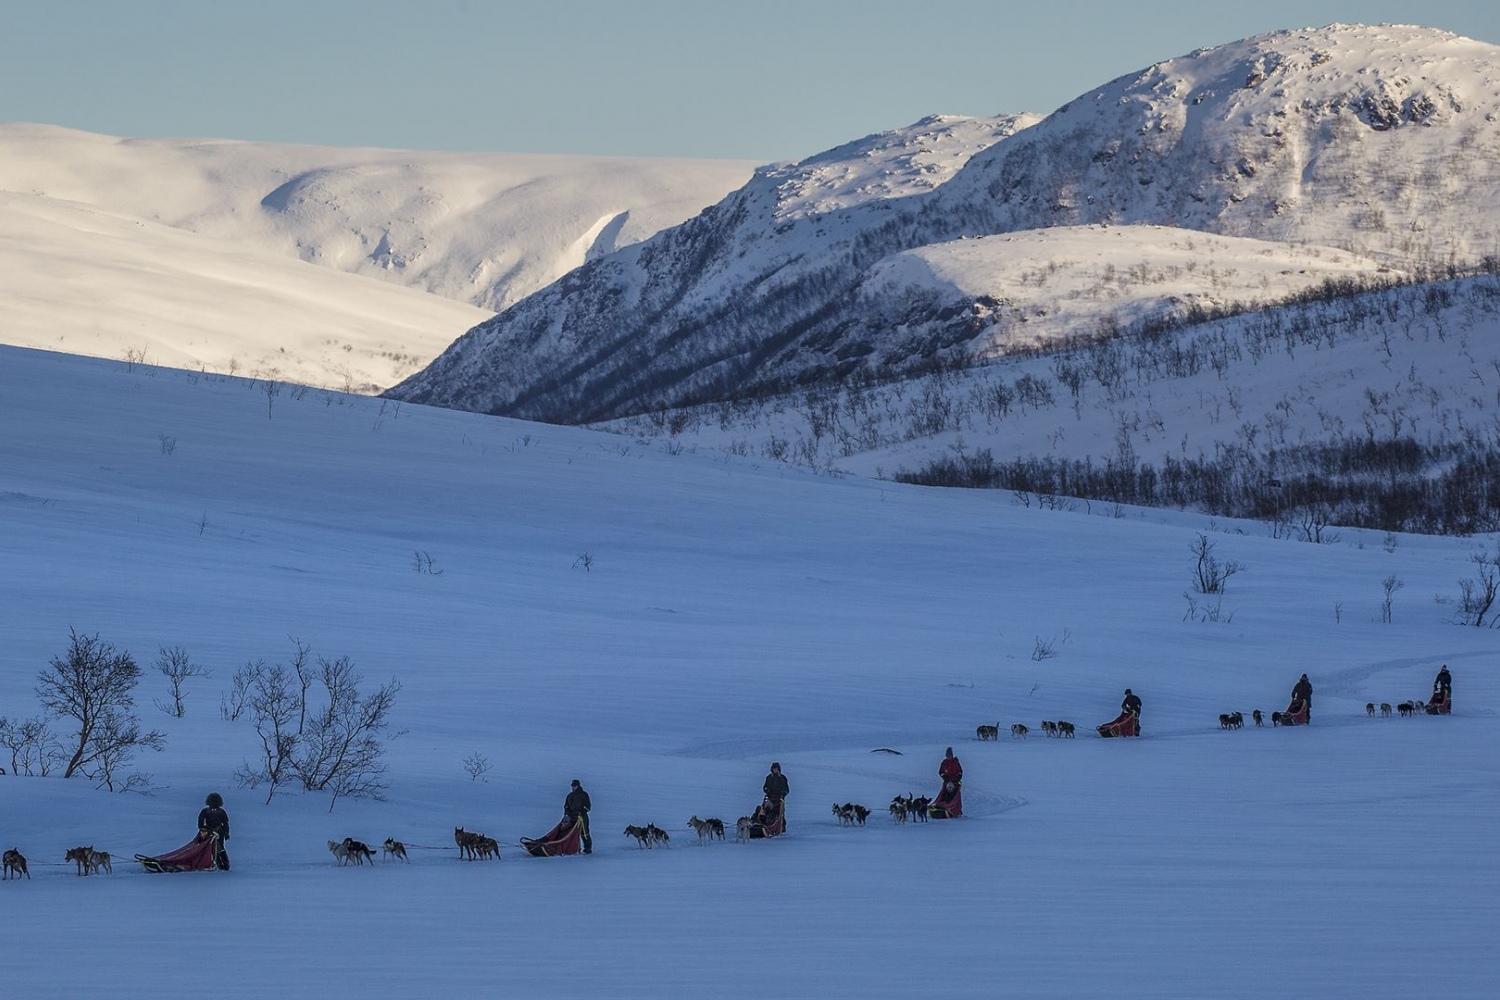 Dog sledding in Arctic winter landscape